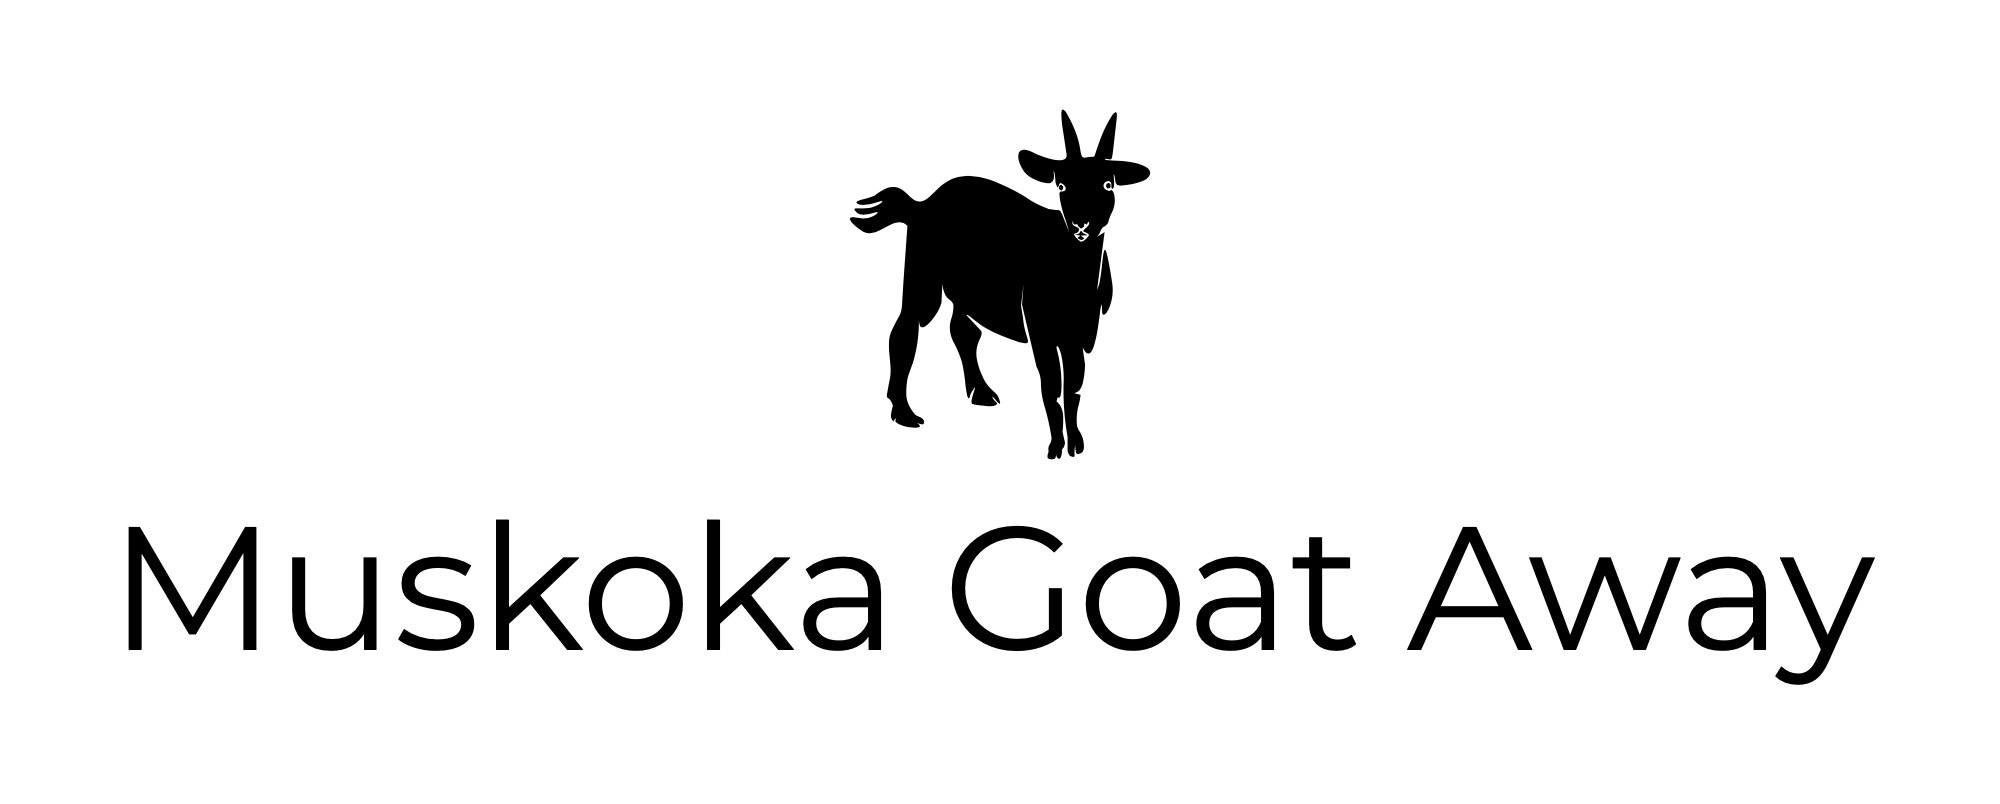 Muskoka Goat Away